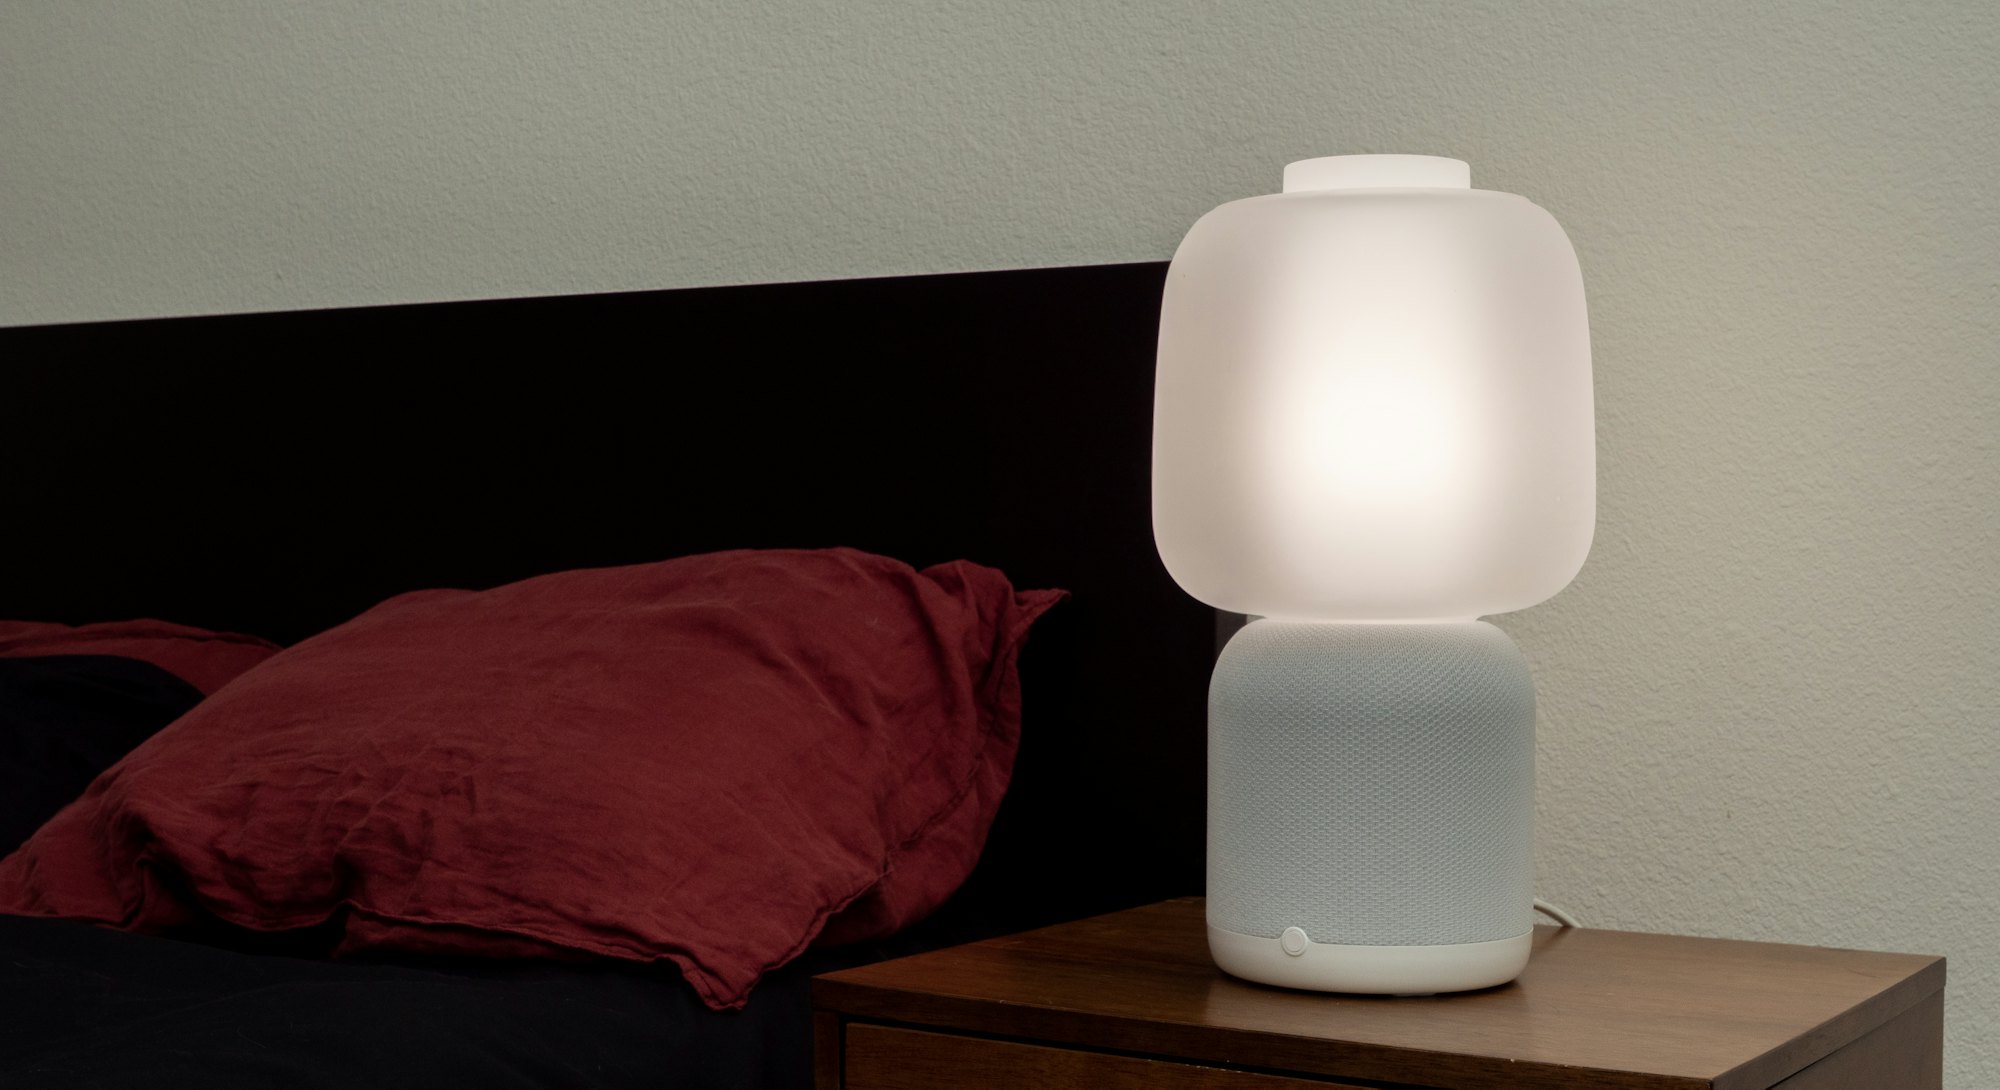 Posdata No es suficiente constante Ikea's 2021 Symfonisk table lamp speaker fixes the original's biggest flaw